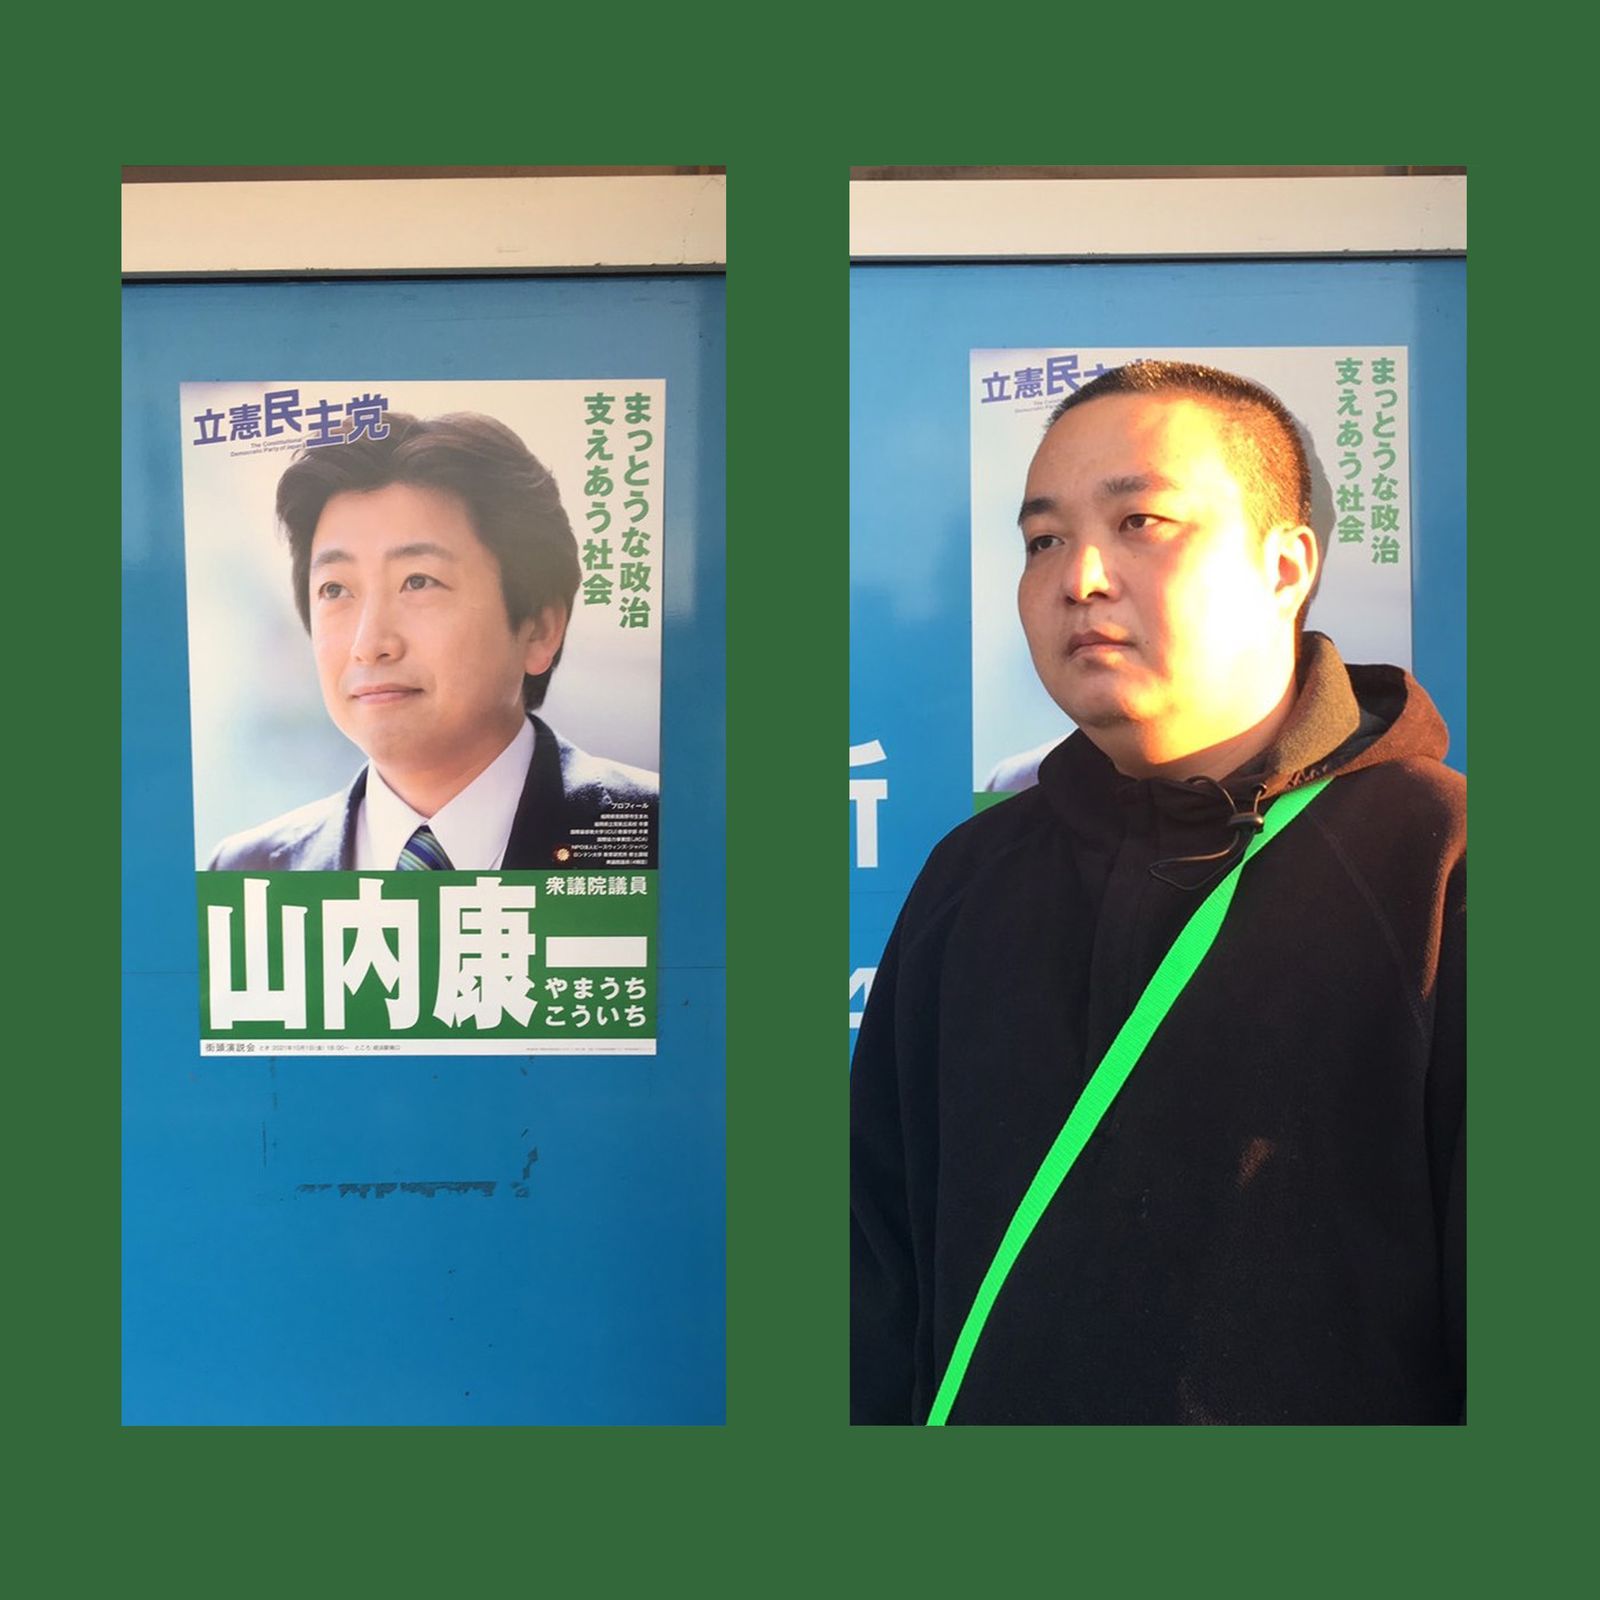 © Inokuchi Masashi - Probaganda Hero Standing in front of political advertising poster, asserting message